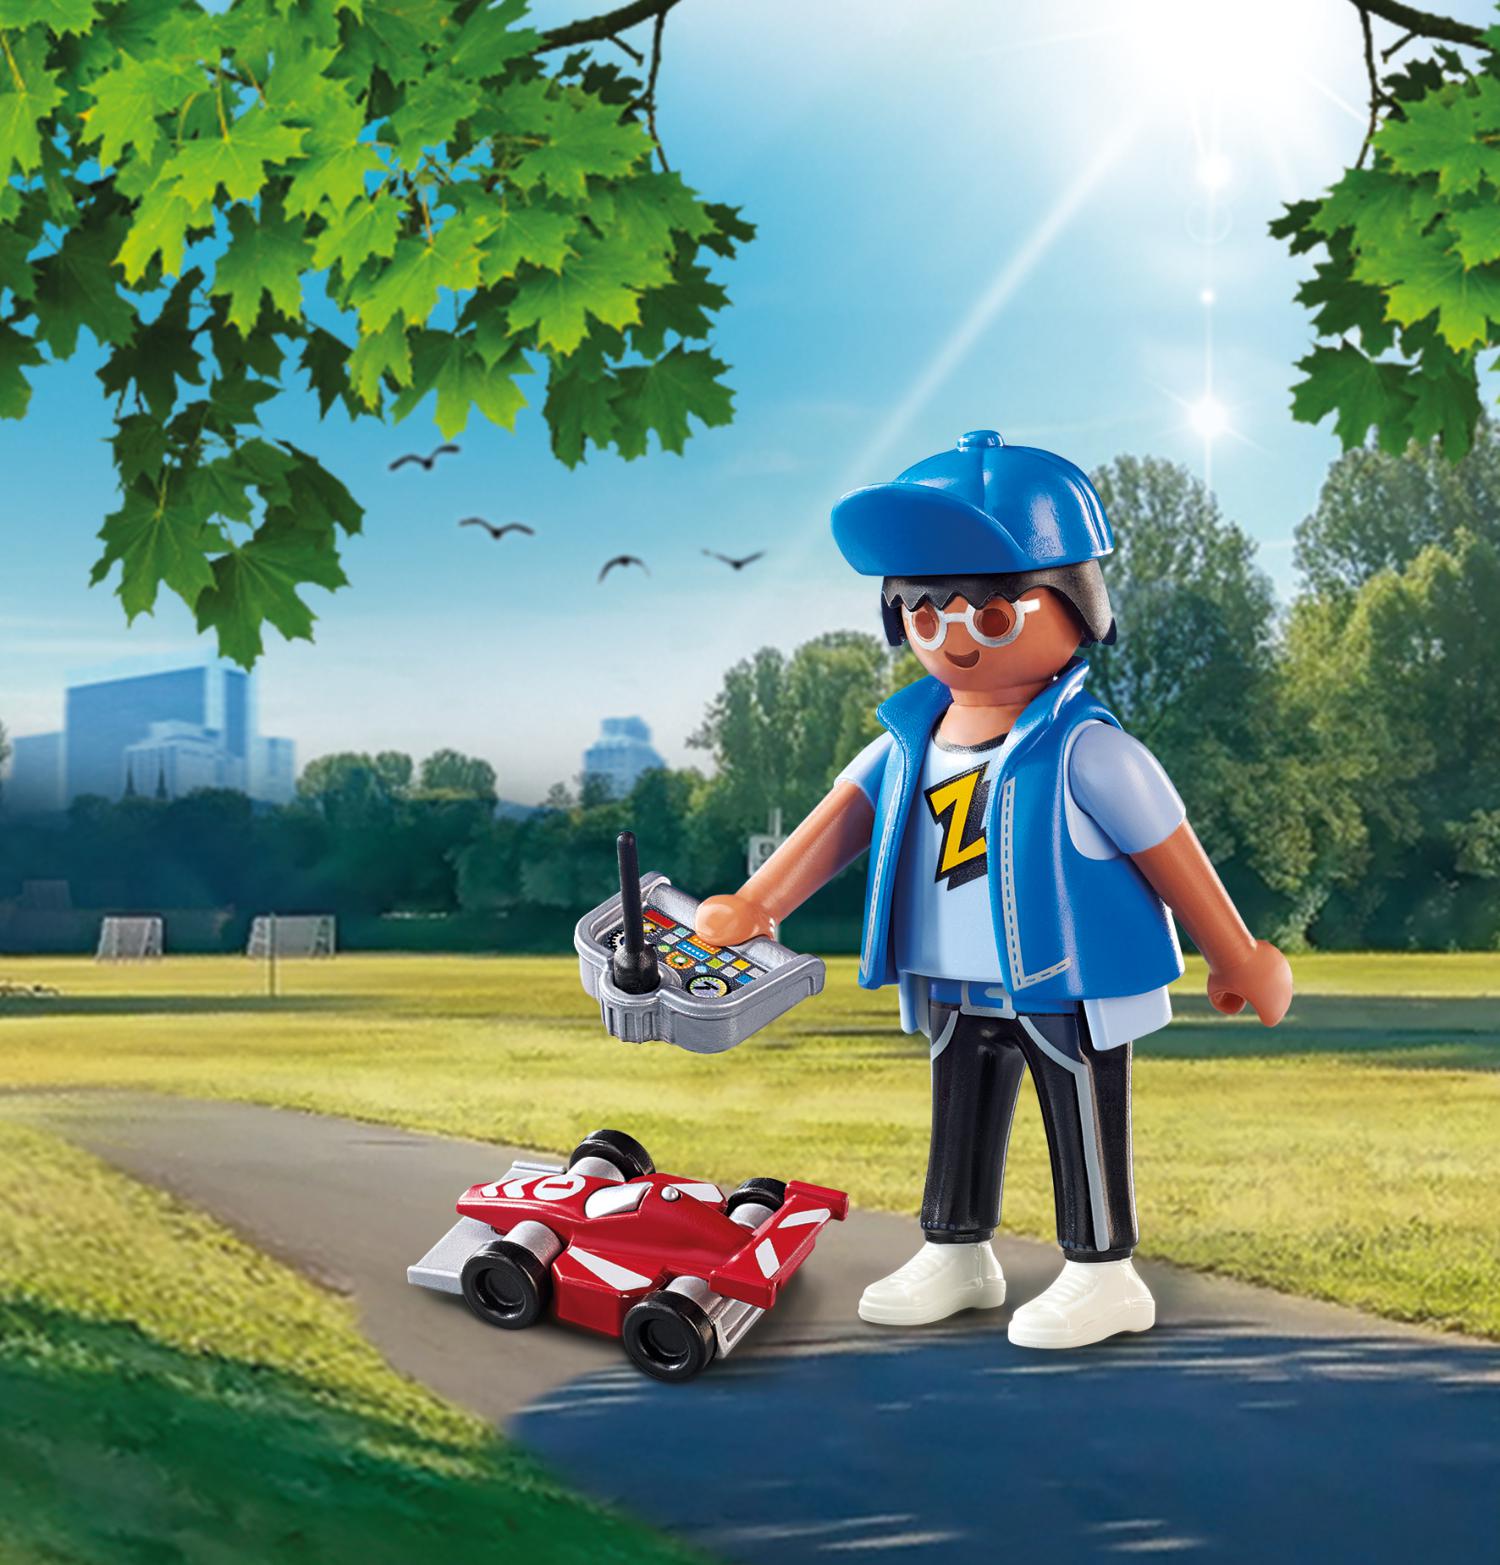 Playmobil Playmo-Friends Αγόρι με τηλεκατευθυνόμενο αυτοκινητάκι 70561 - Playmobil, Playmobil Playmo-Friends